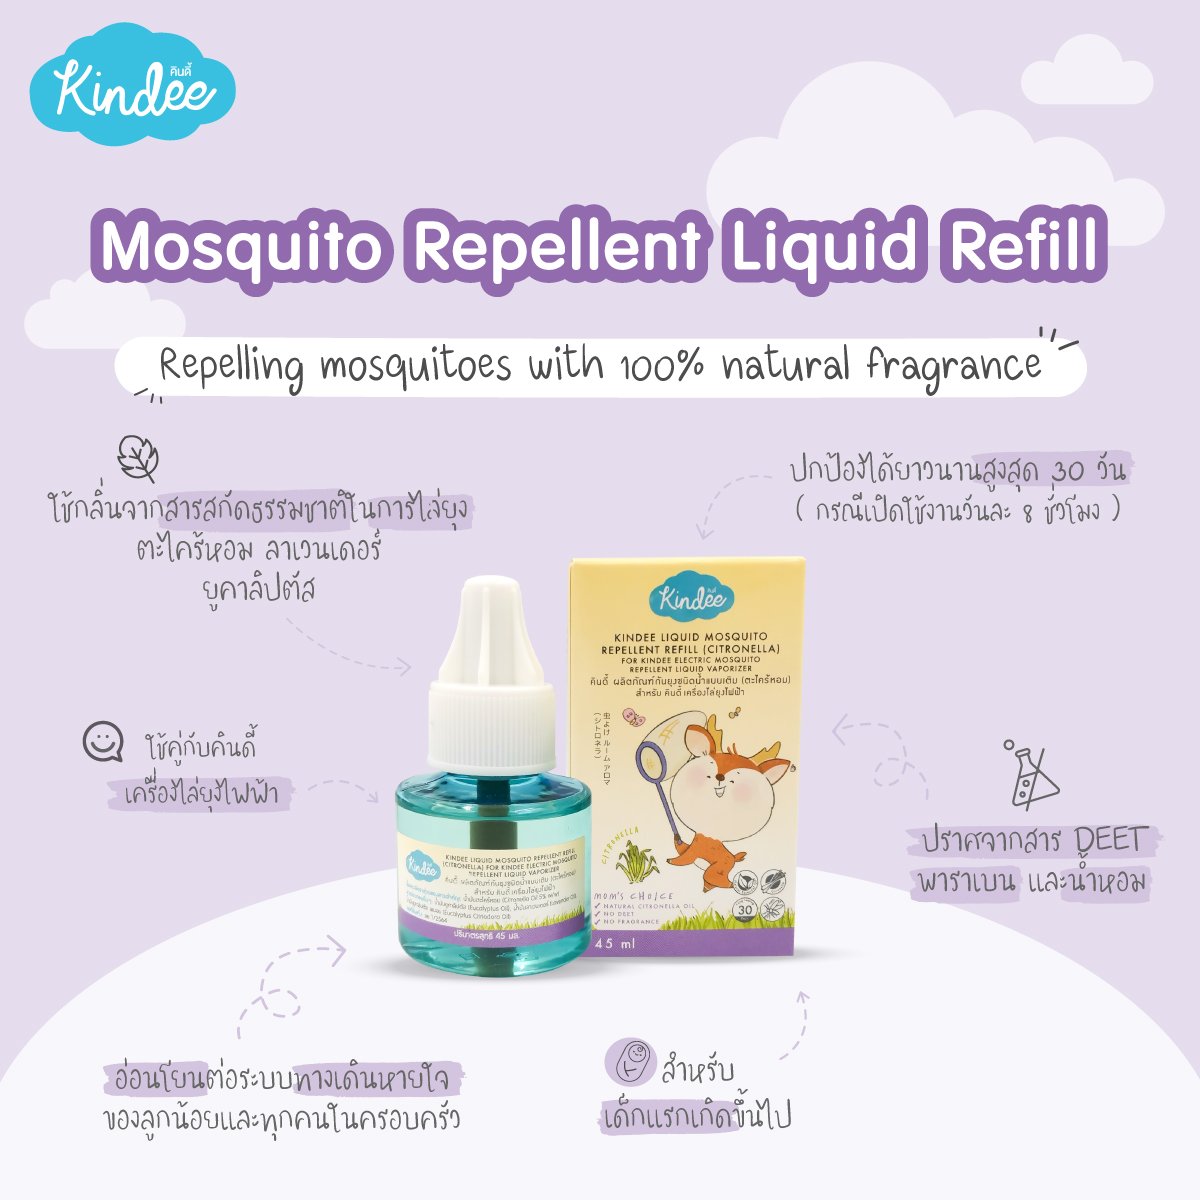 Kindee Mosquito Repellent Liquid Refill